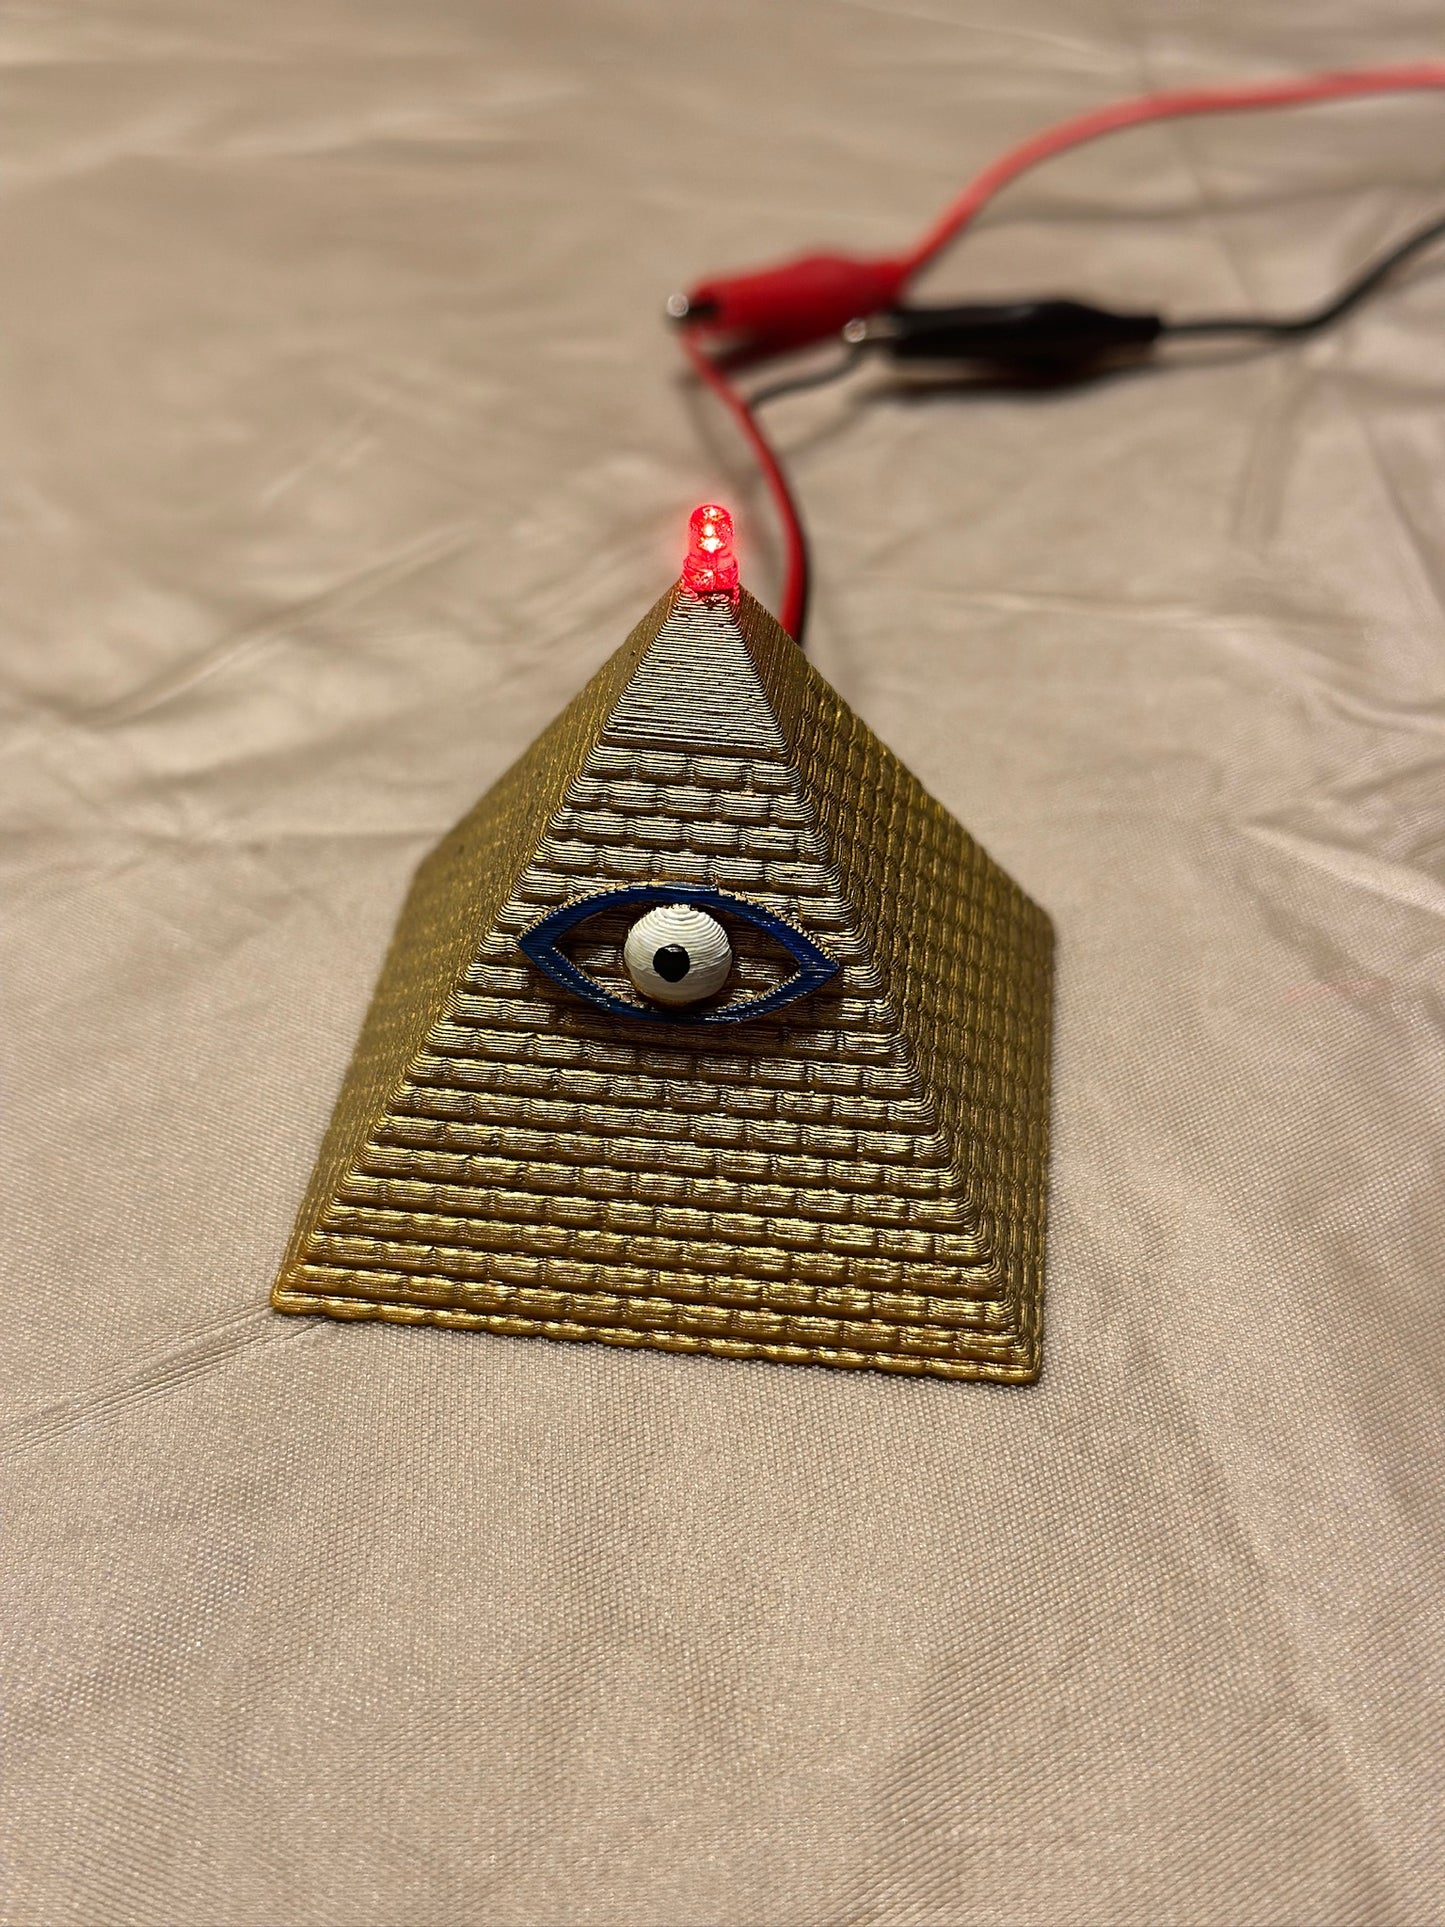 Twilight Zone Pinball Illuminated Pyramid Mod